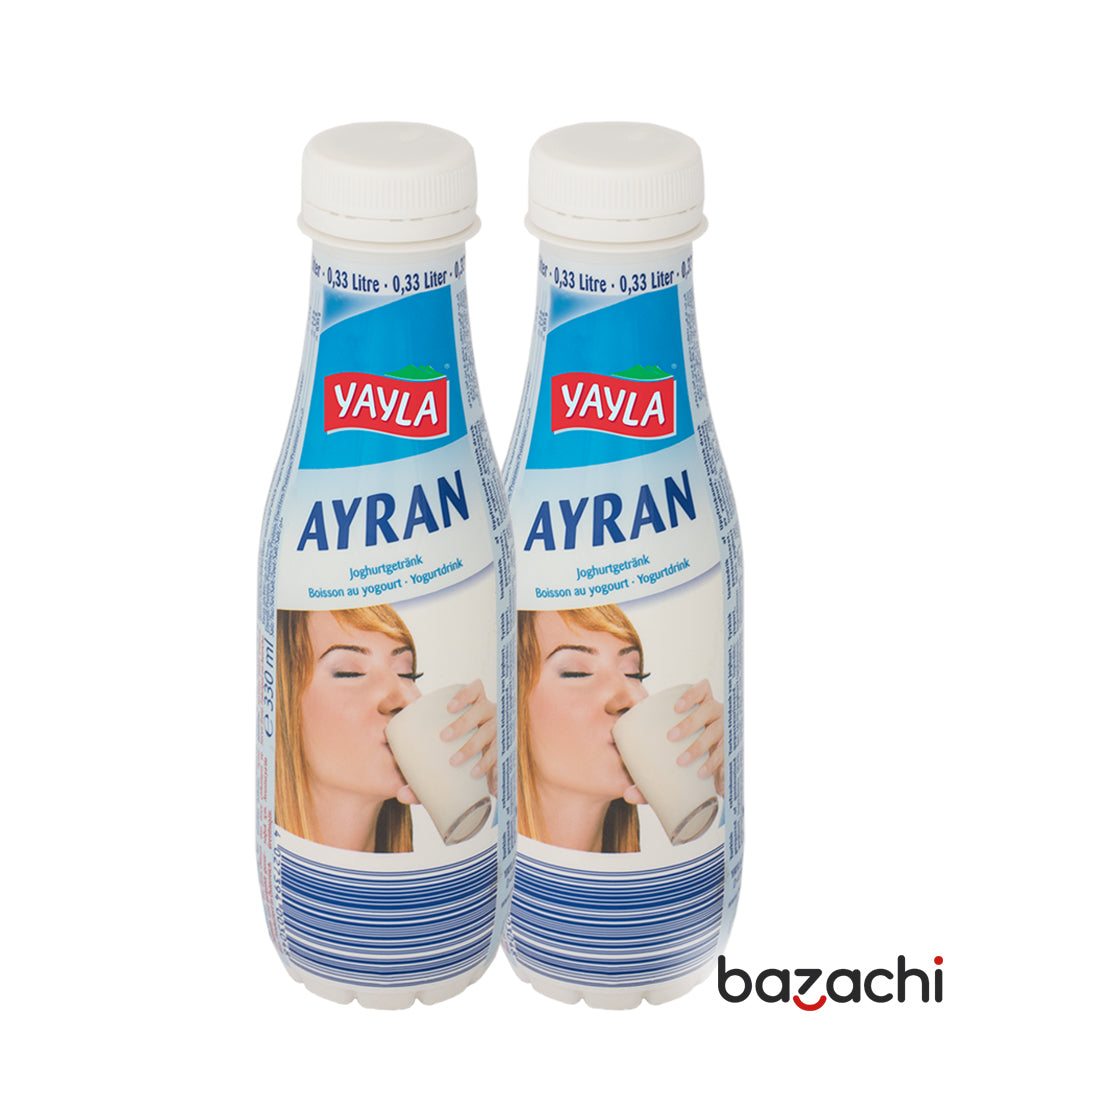 Yayla Ayran - Natural Yoghurt Drink 330ml